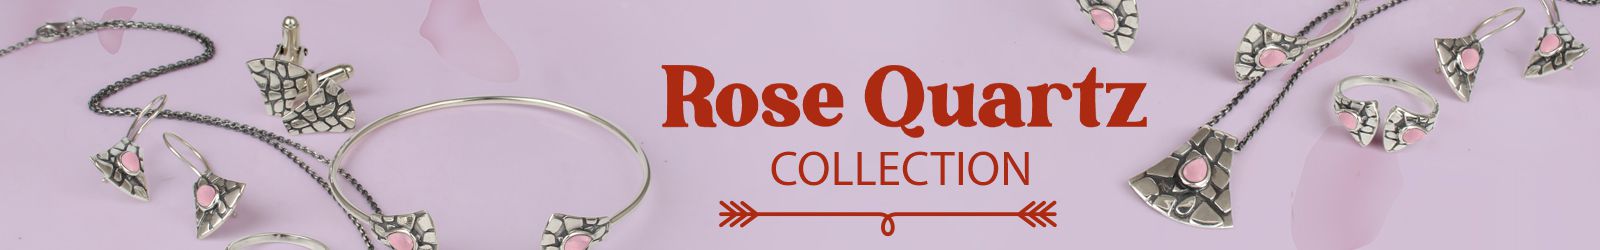 Silver Rose Quartz Jewelry Wholesale Supplier